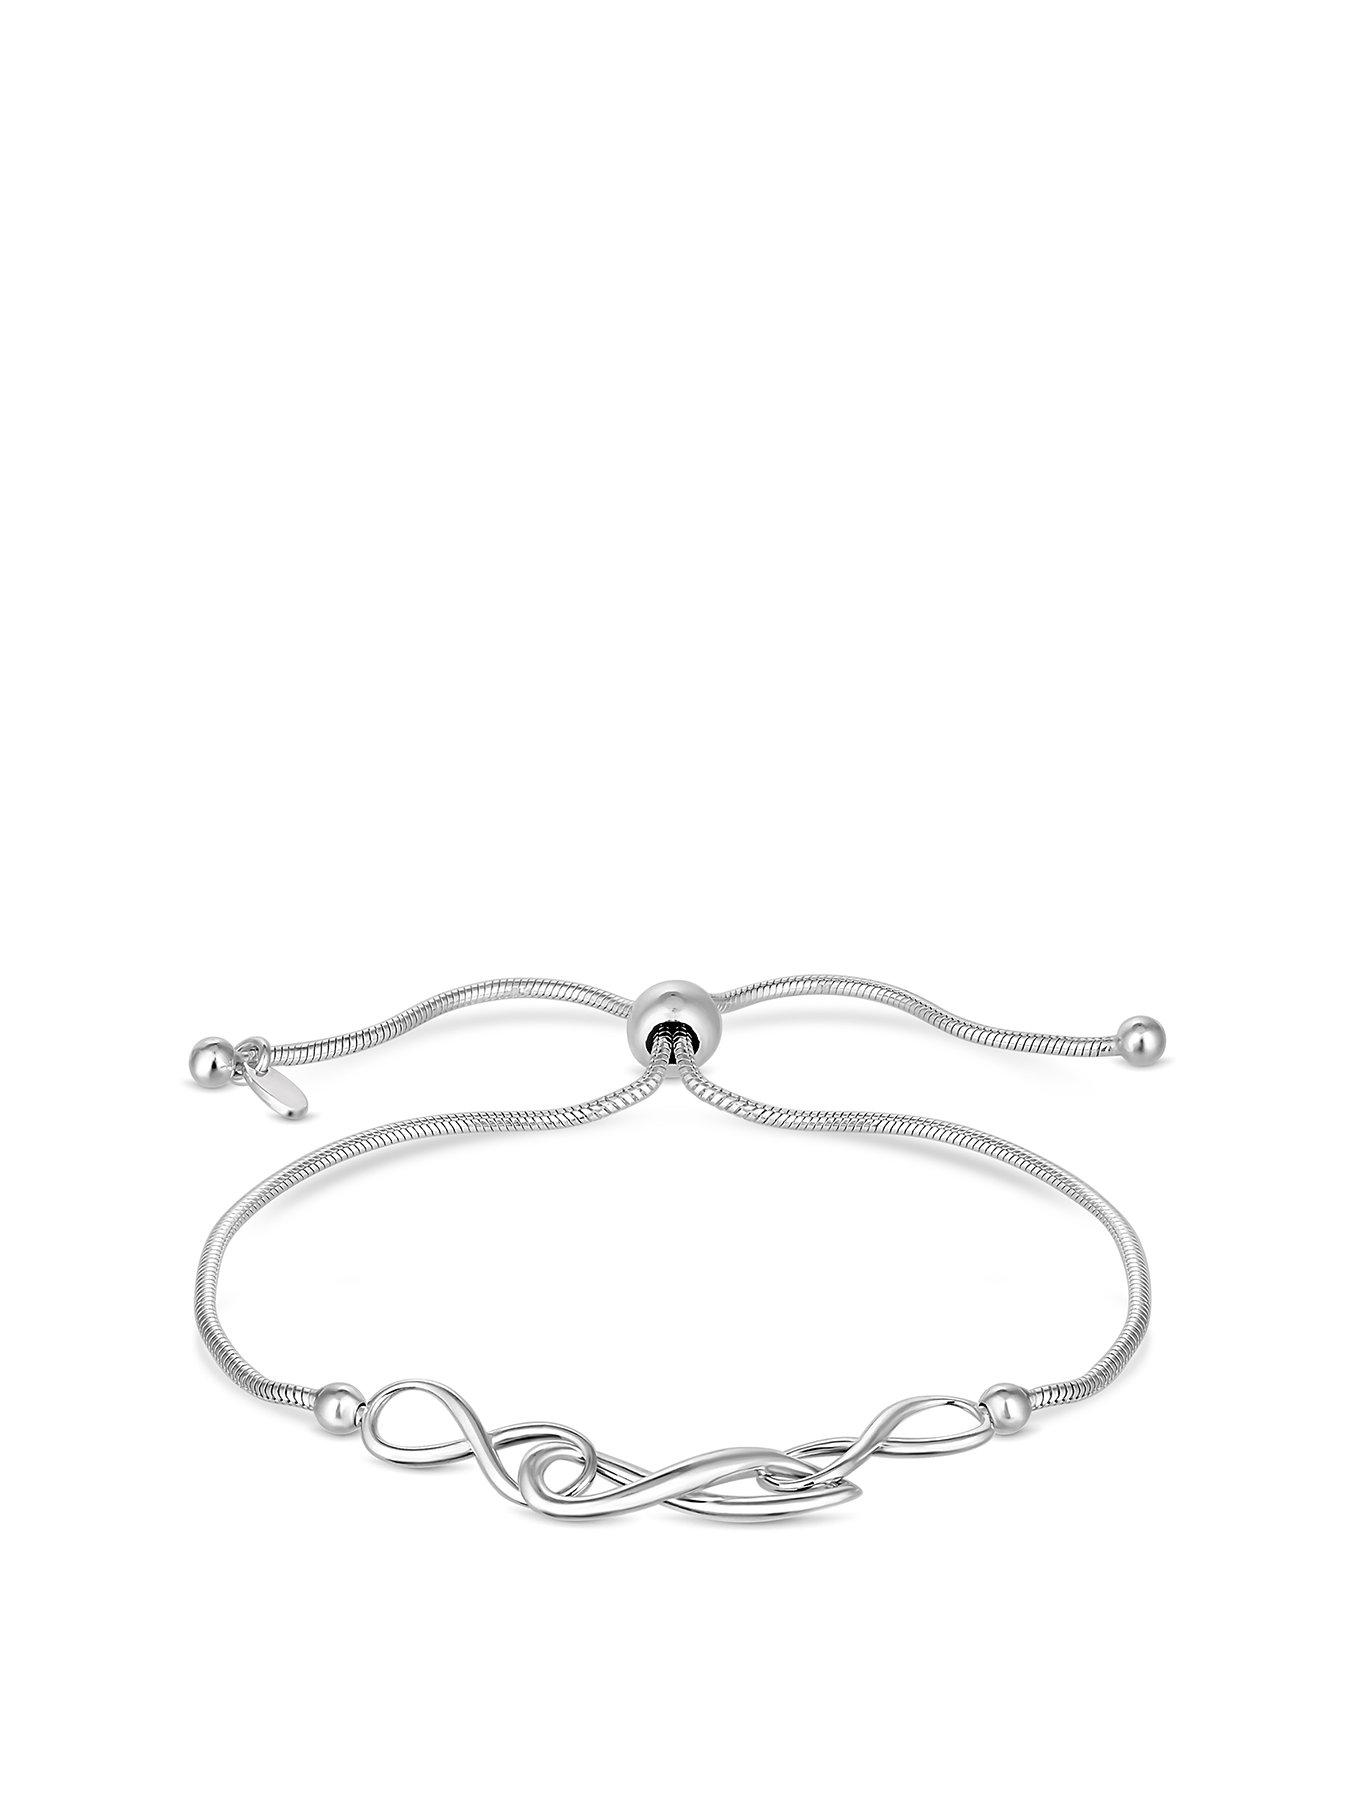 Sterling Silver | Bracelets | Gifts & jewellery | Very Ireland